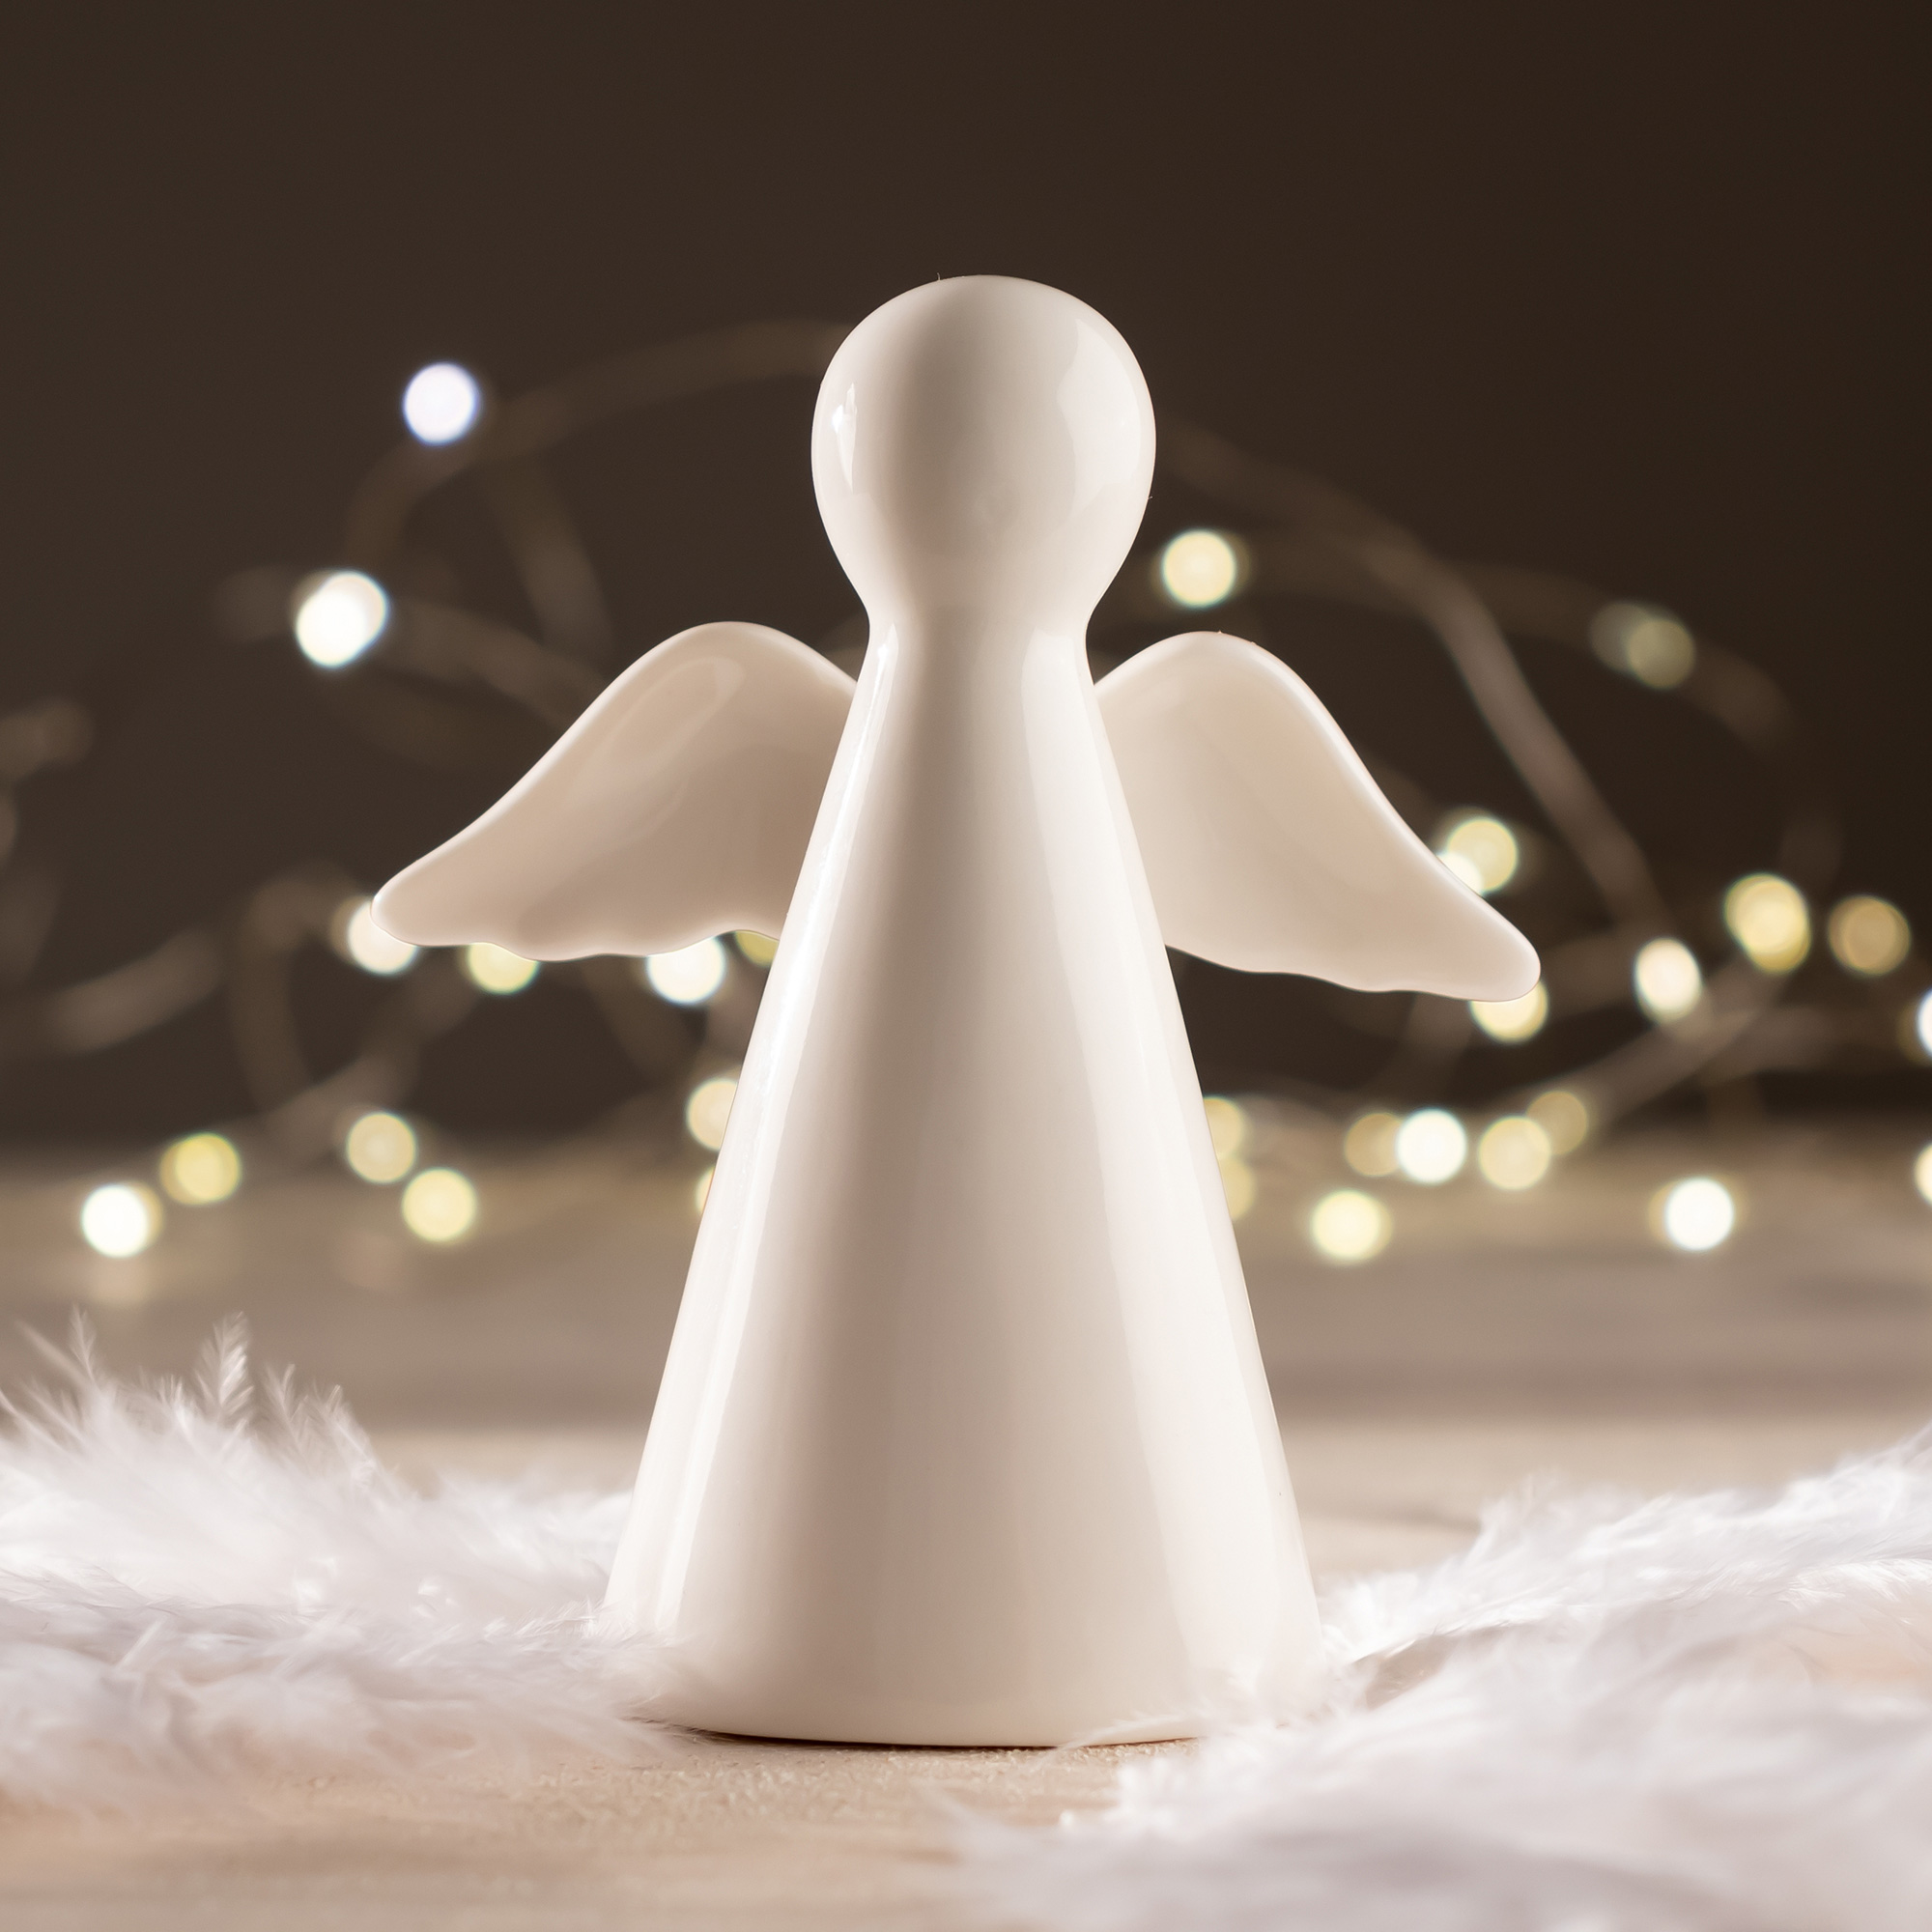 Schutzengel Glücksbringer als Geldgeschenk, Engelfigur in dekorativer Geschenkbox, Engel Geldgeschenk Weihnachten, Mini Schutzengel Figur in weiß